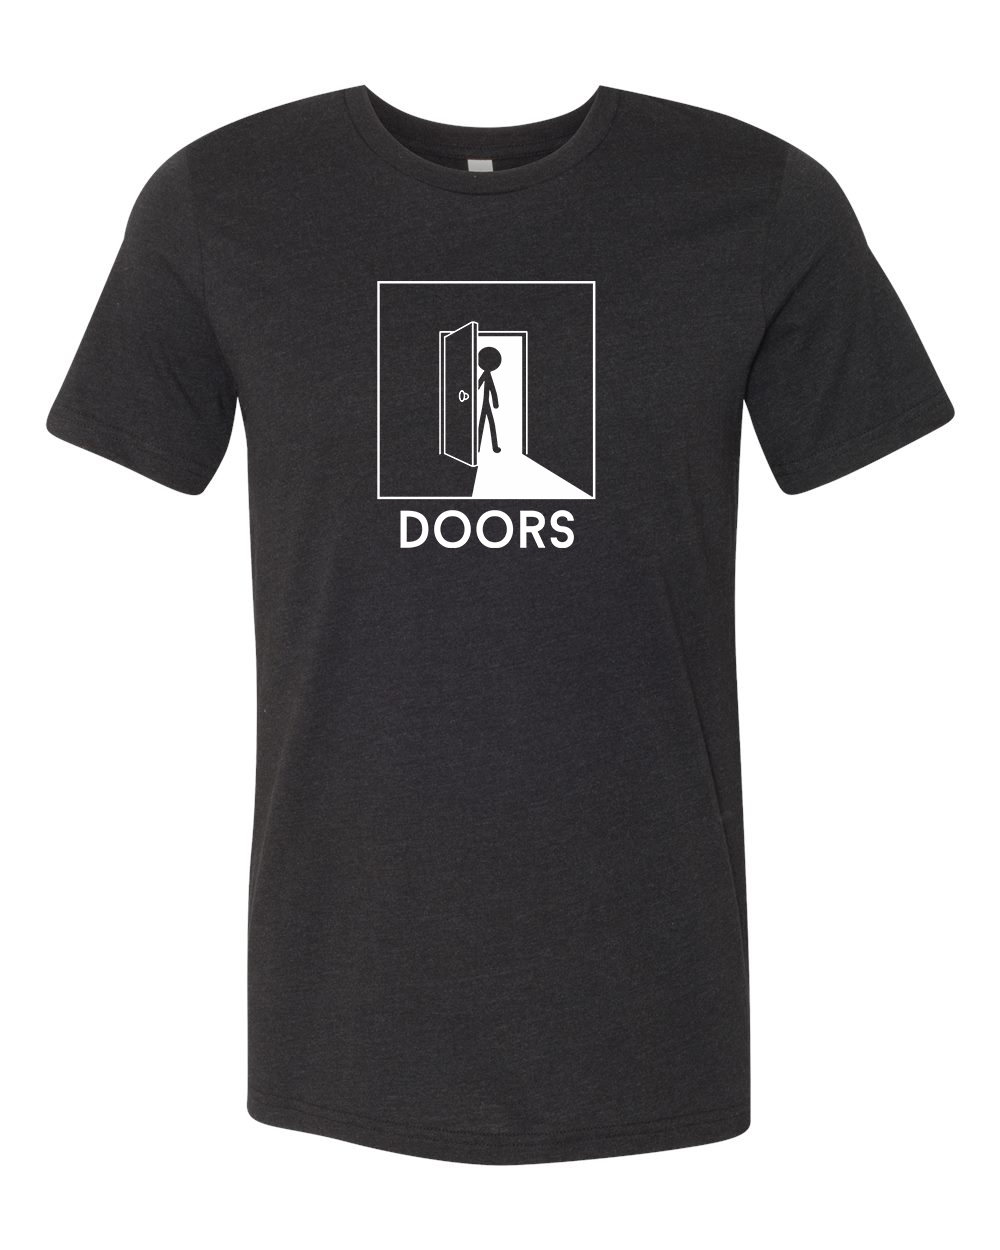 Doors Shirt - Limited Edition